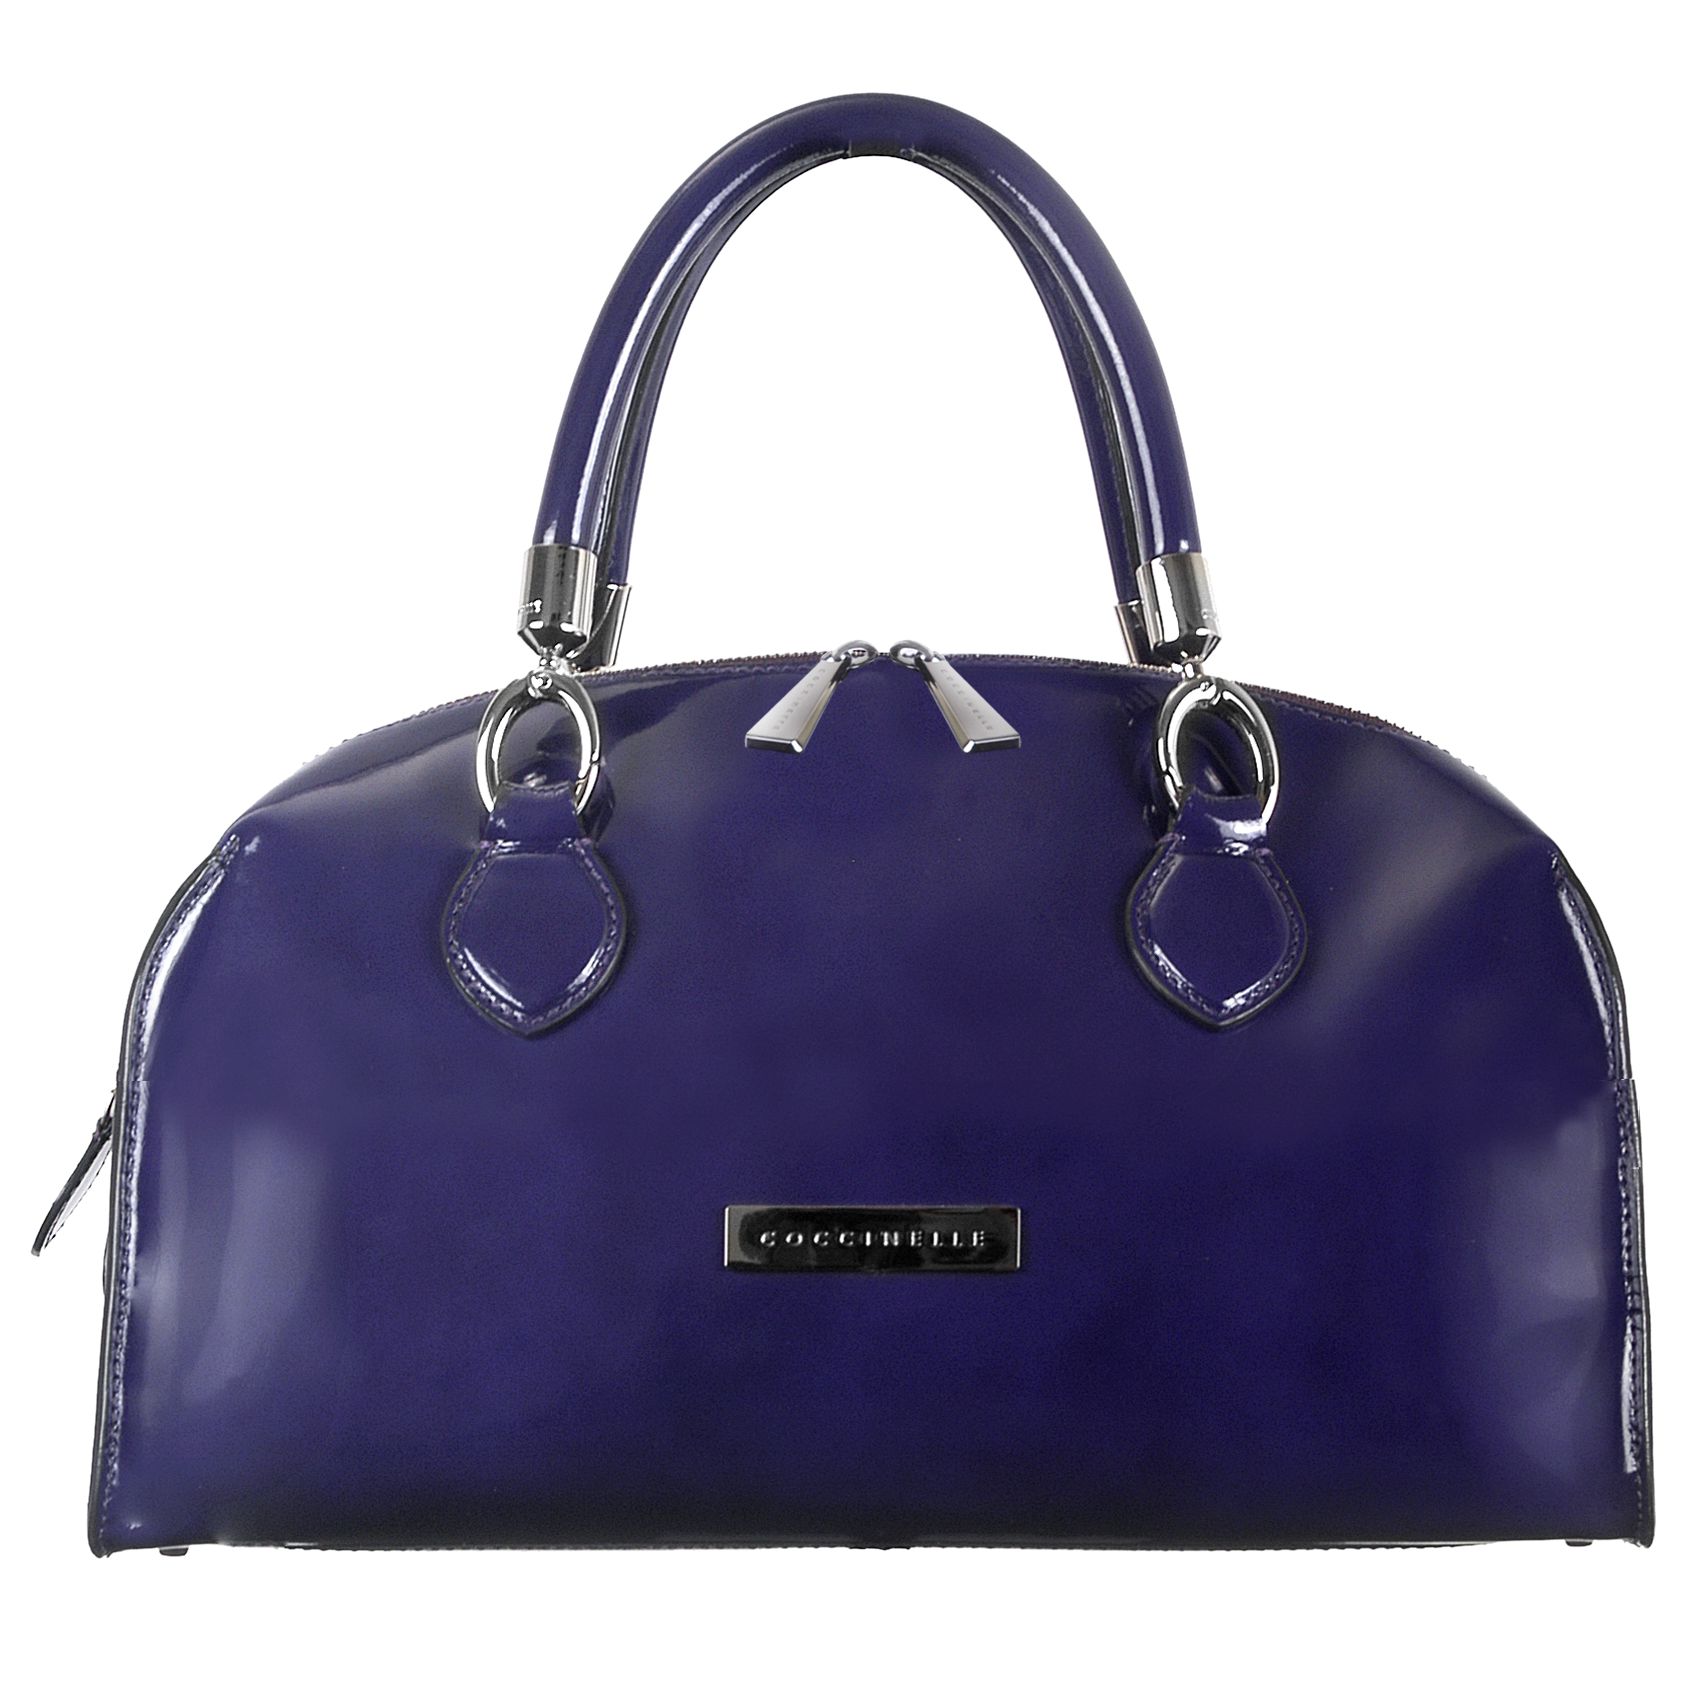 Coccinelle Spazzalato Formal Medium Grab Handbag, Purple at JohnLewis